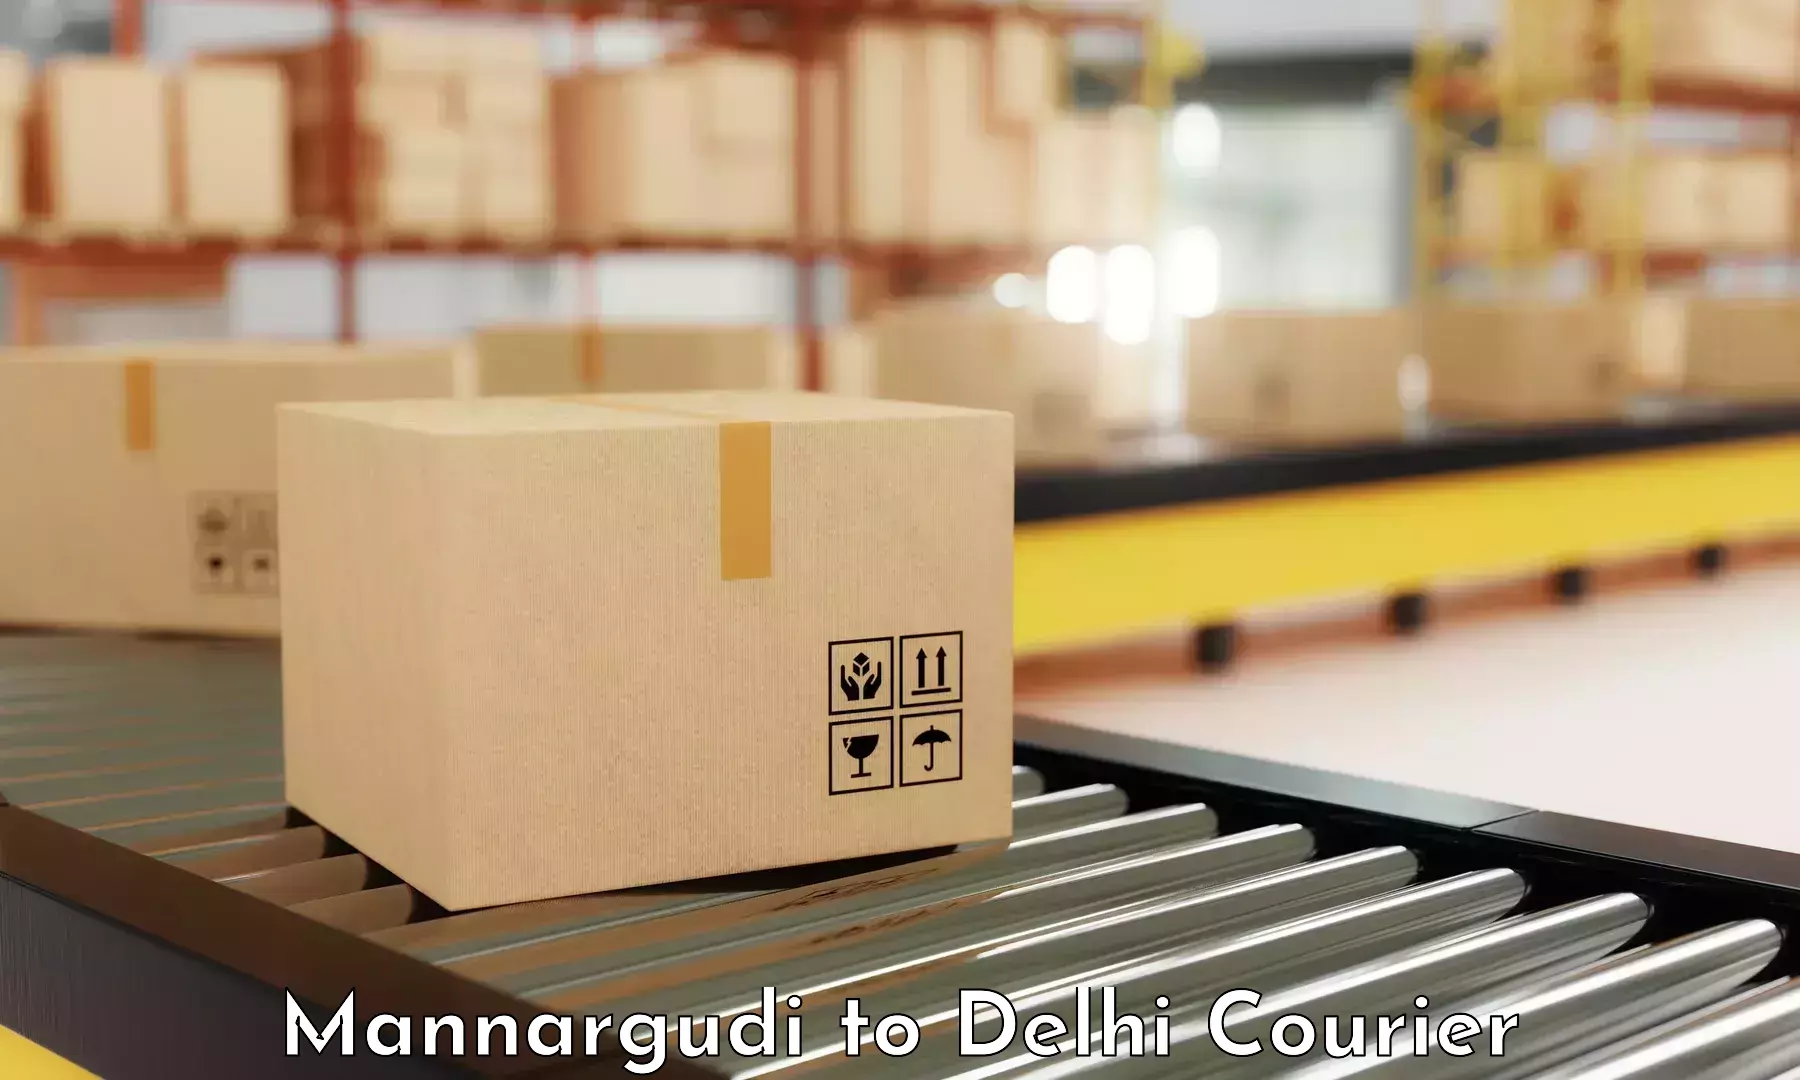 State-of-the-art courier technology Mannargudi to Kalkaji